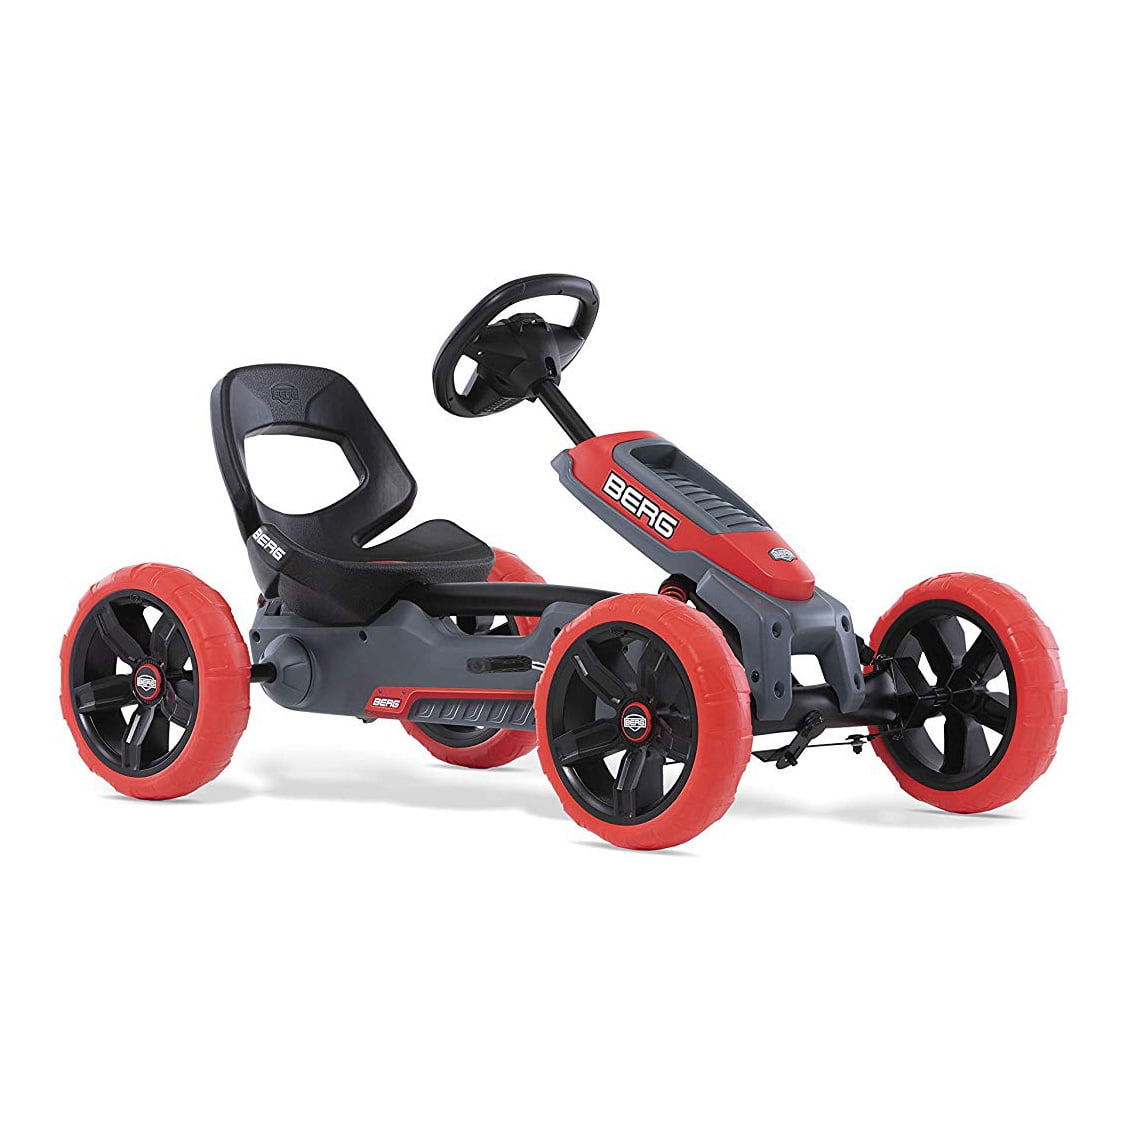 Berg Buddy Case IH Kids Pedal Car Go Kart Red 3-8 Years NEW 